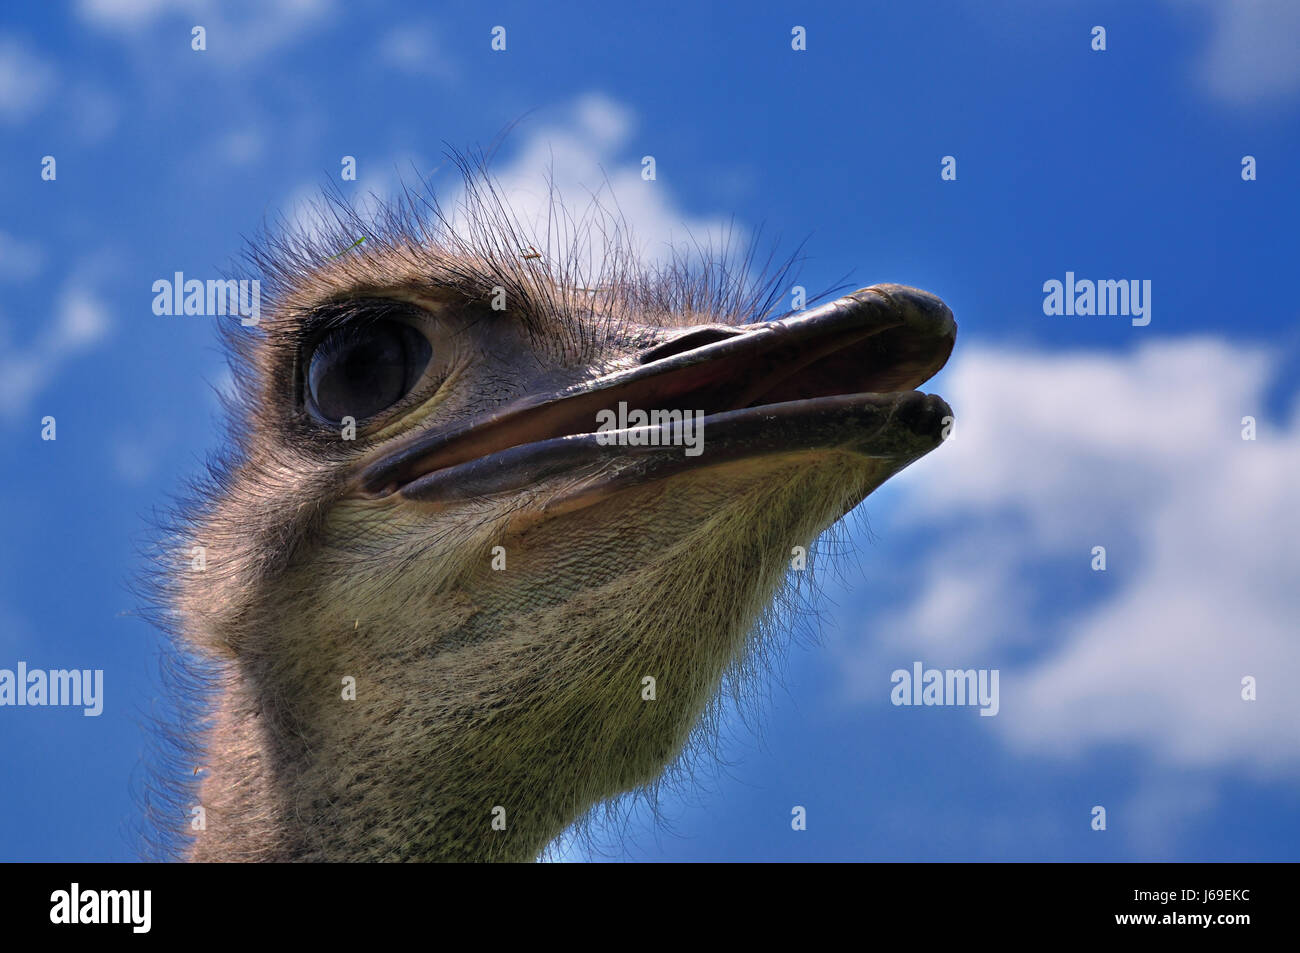 Uccelli uccelli testa di struzzo nosegay macro close-up di ammissione macro vista ravvicinata Foto Stock